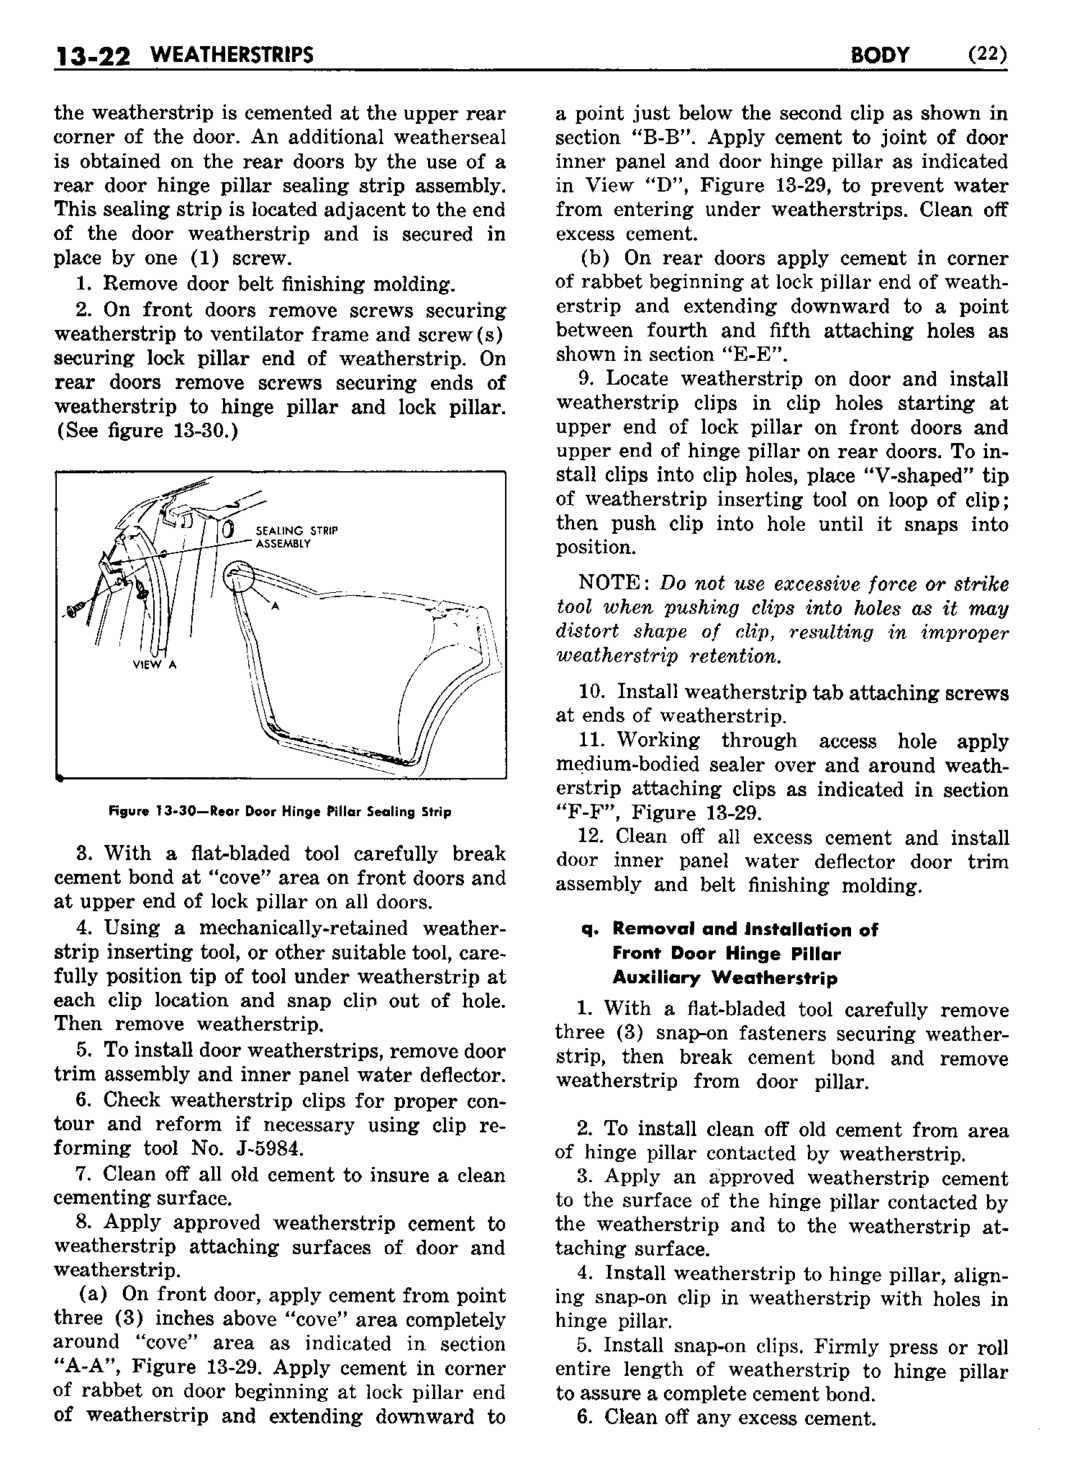 n_1958 Buick Body Service Manual-023-023.jpg